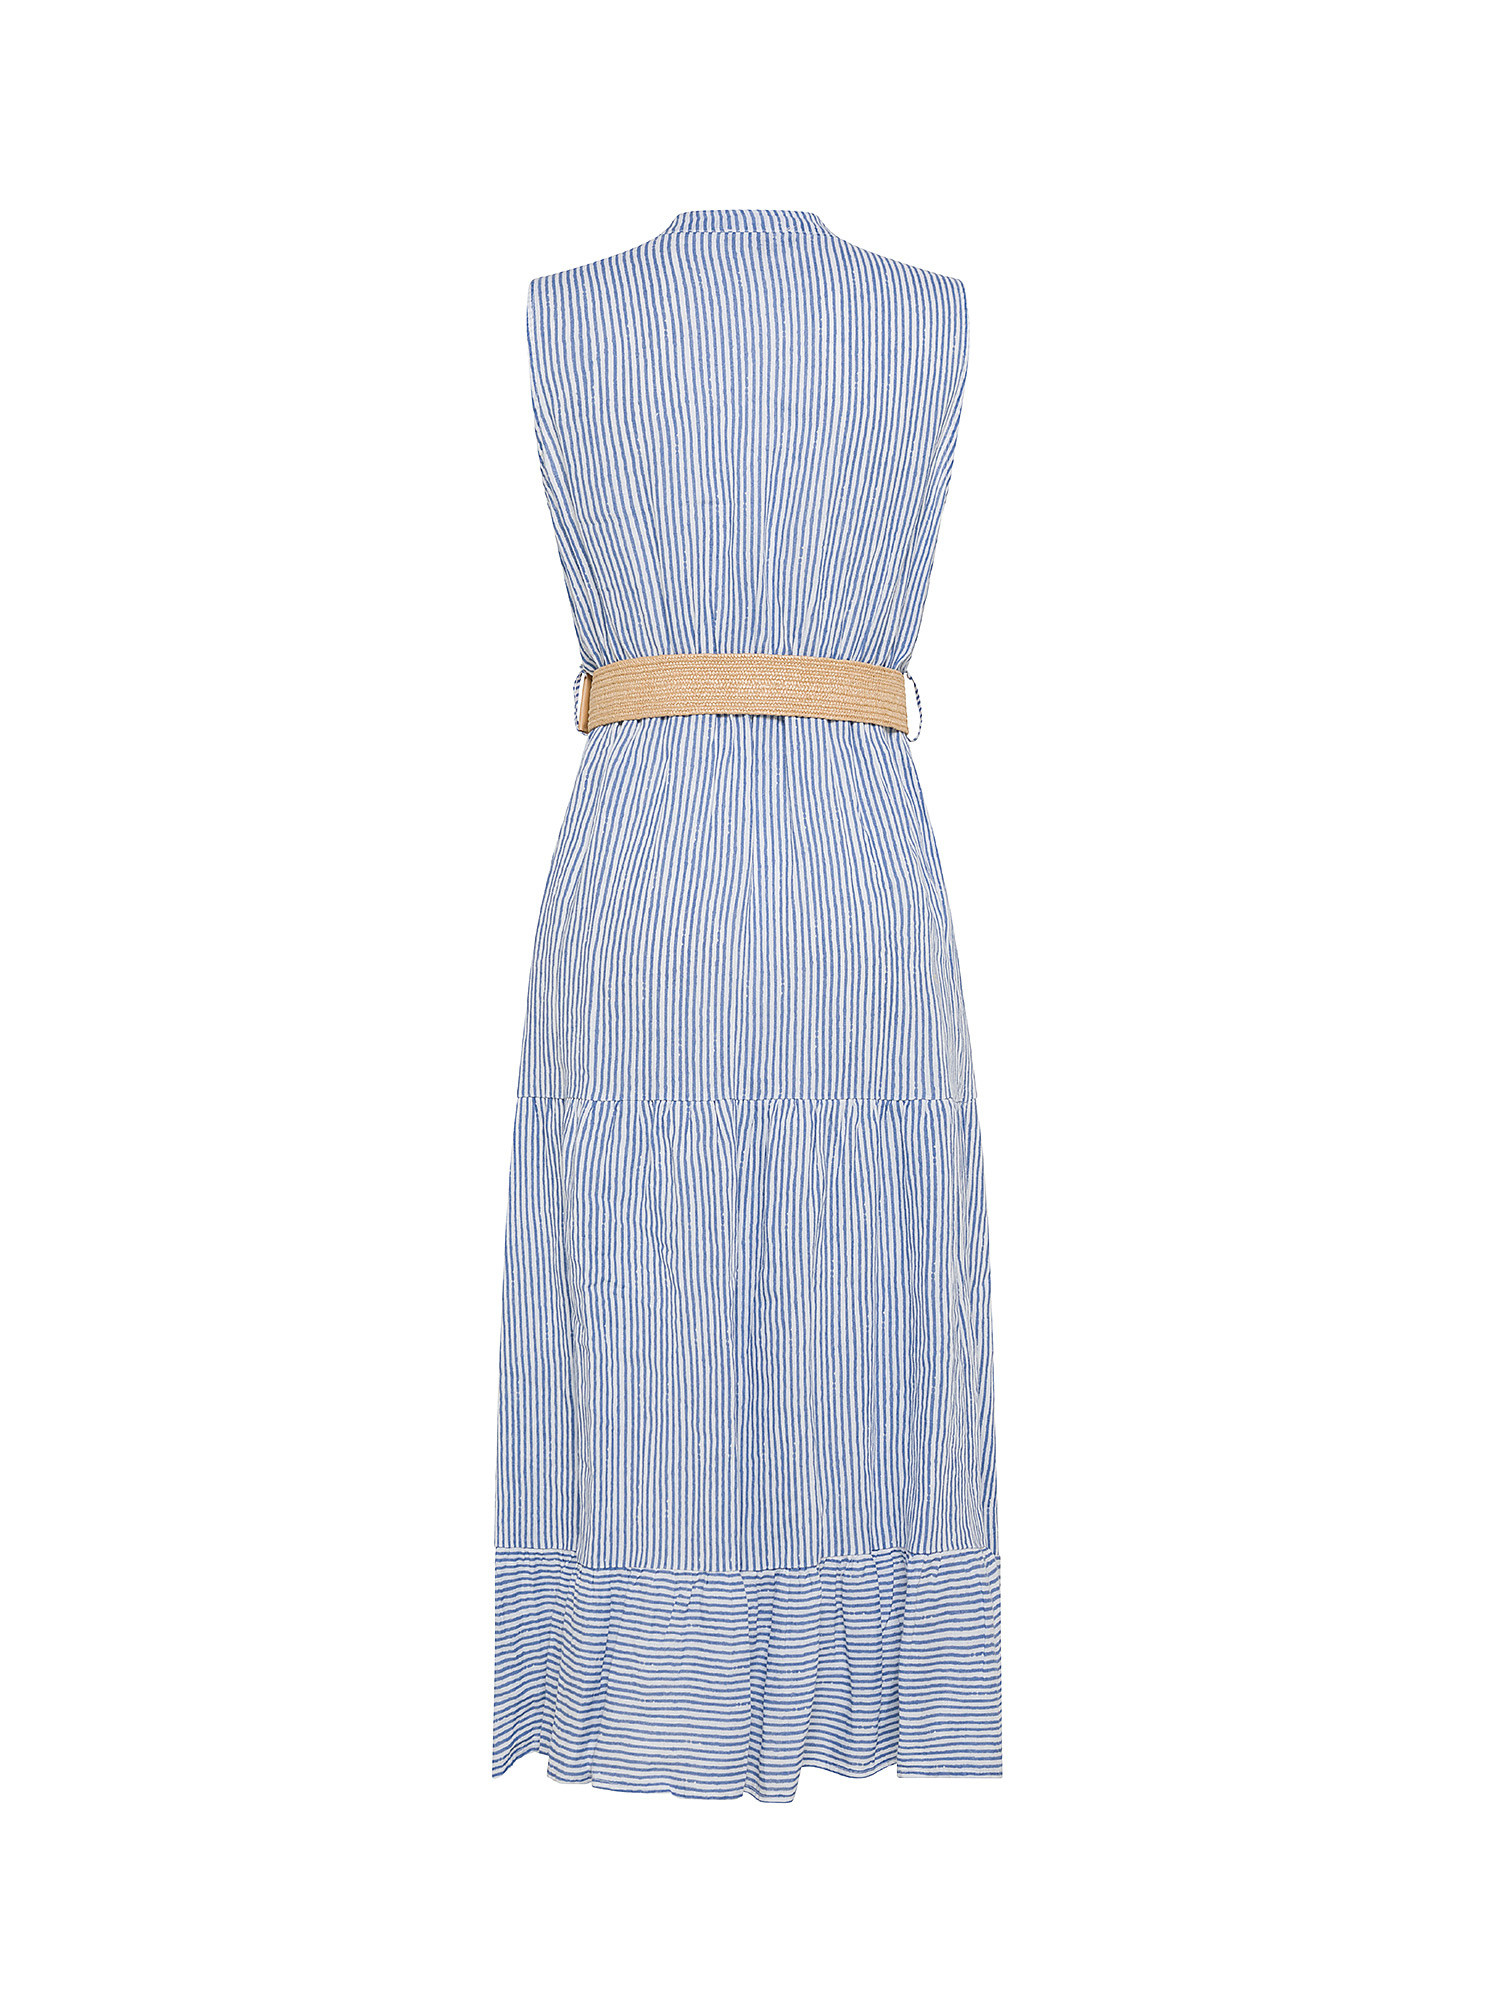 Koan - Long striped linen dress, Light Blue, large image number 1